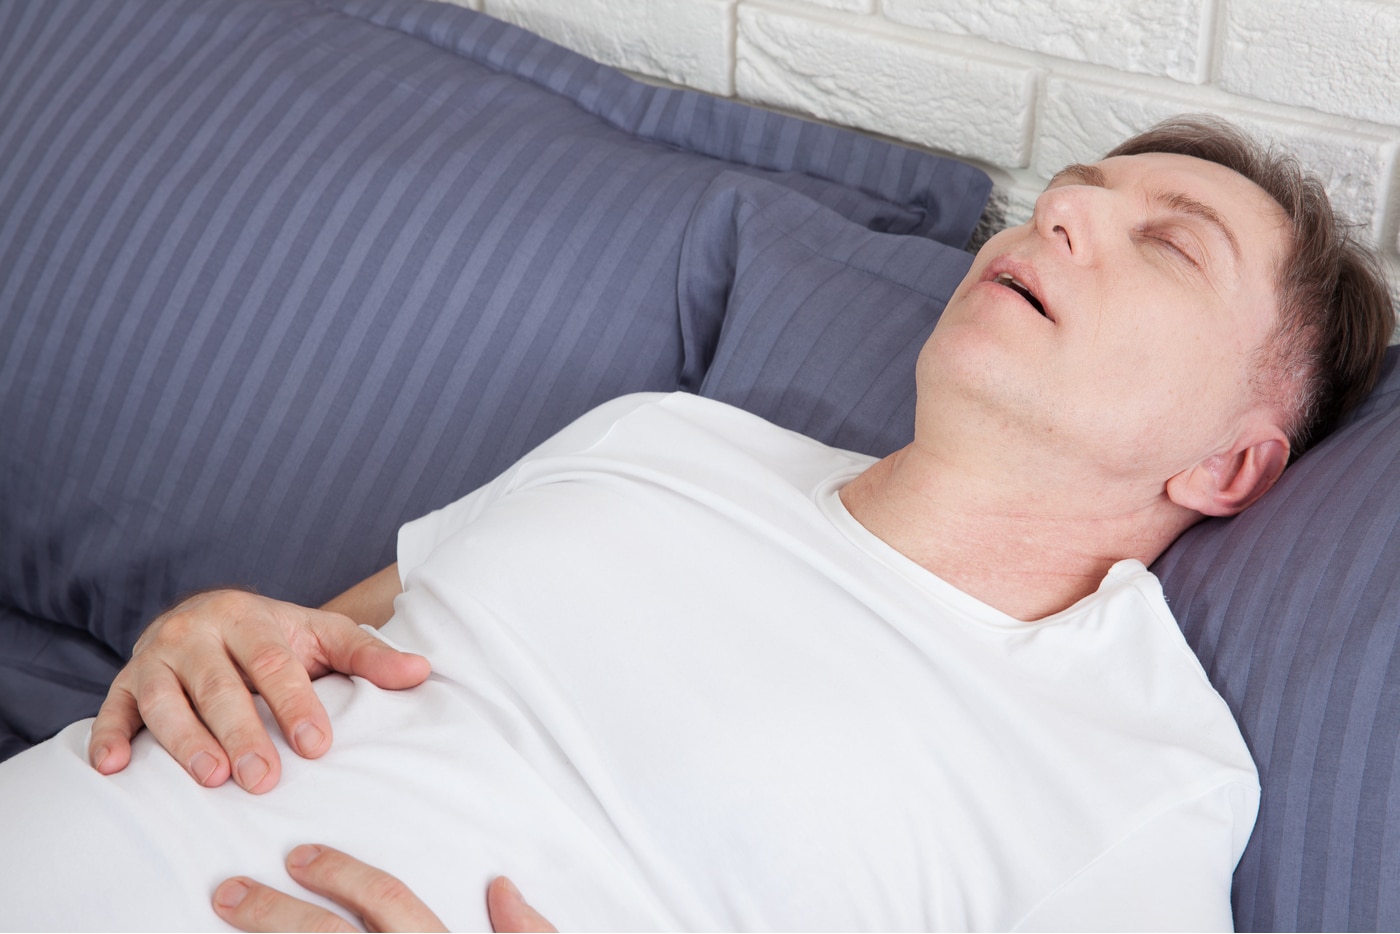 śpiący mężczyzna śpi na plecach i ma problemy z bebechem sennym